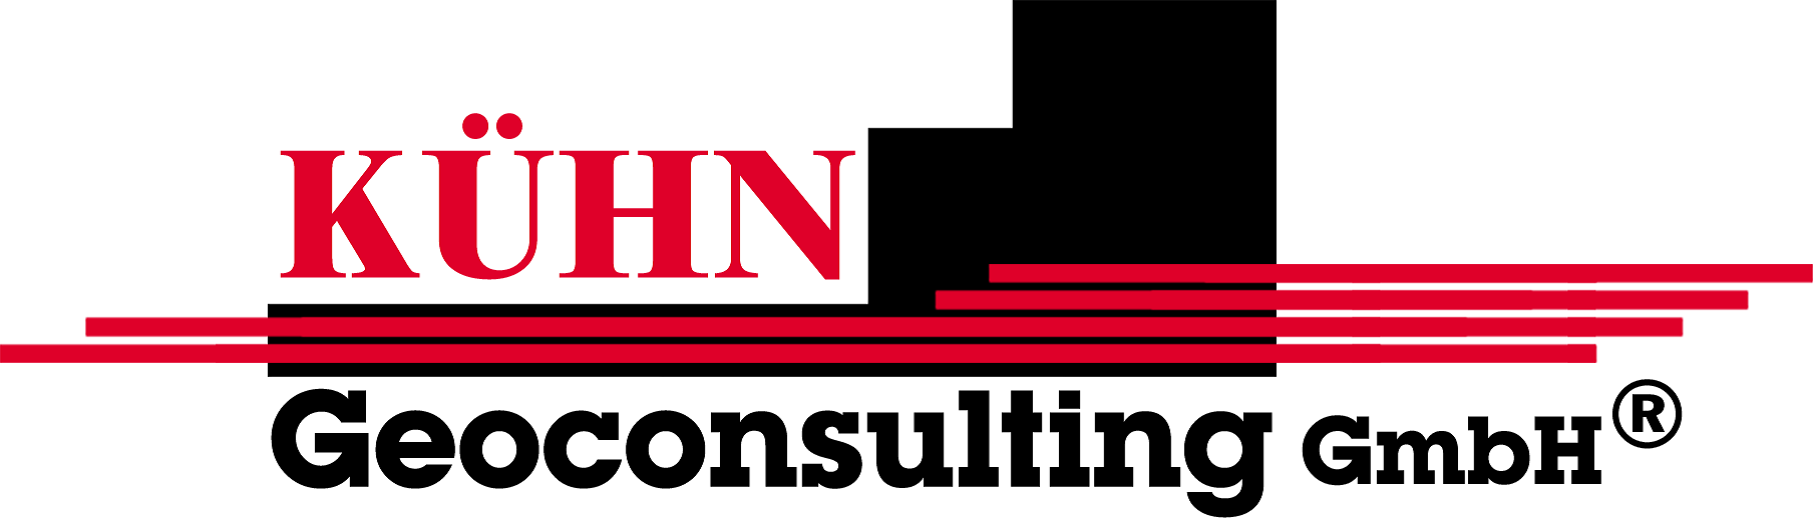 Kühn Geoconsulting GmbH Logo